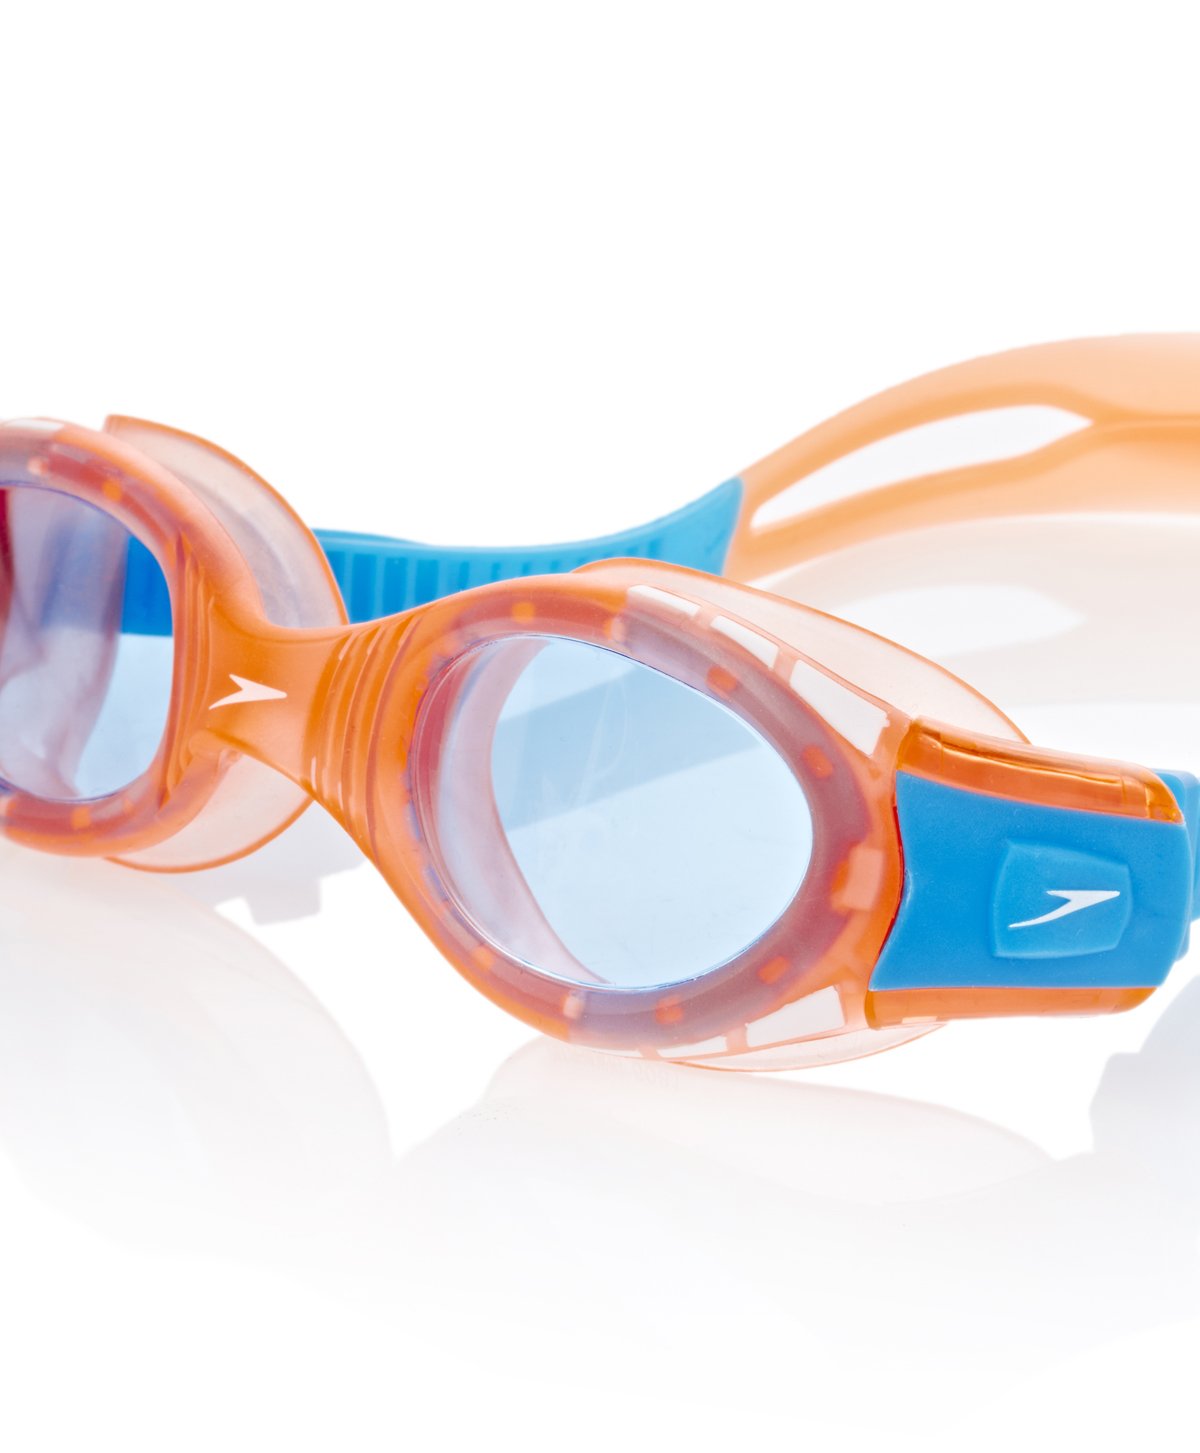 Speedo Unisex - Junior Futura Biofuse Goggles (Assorted) - Best Price online Prokicksports.com